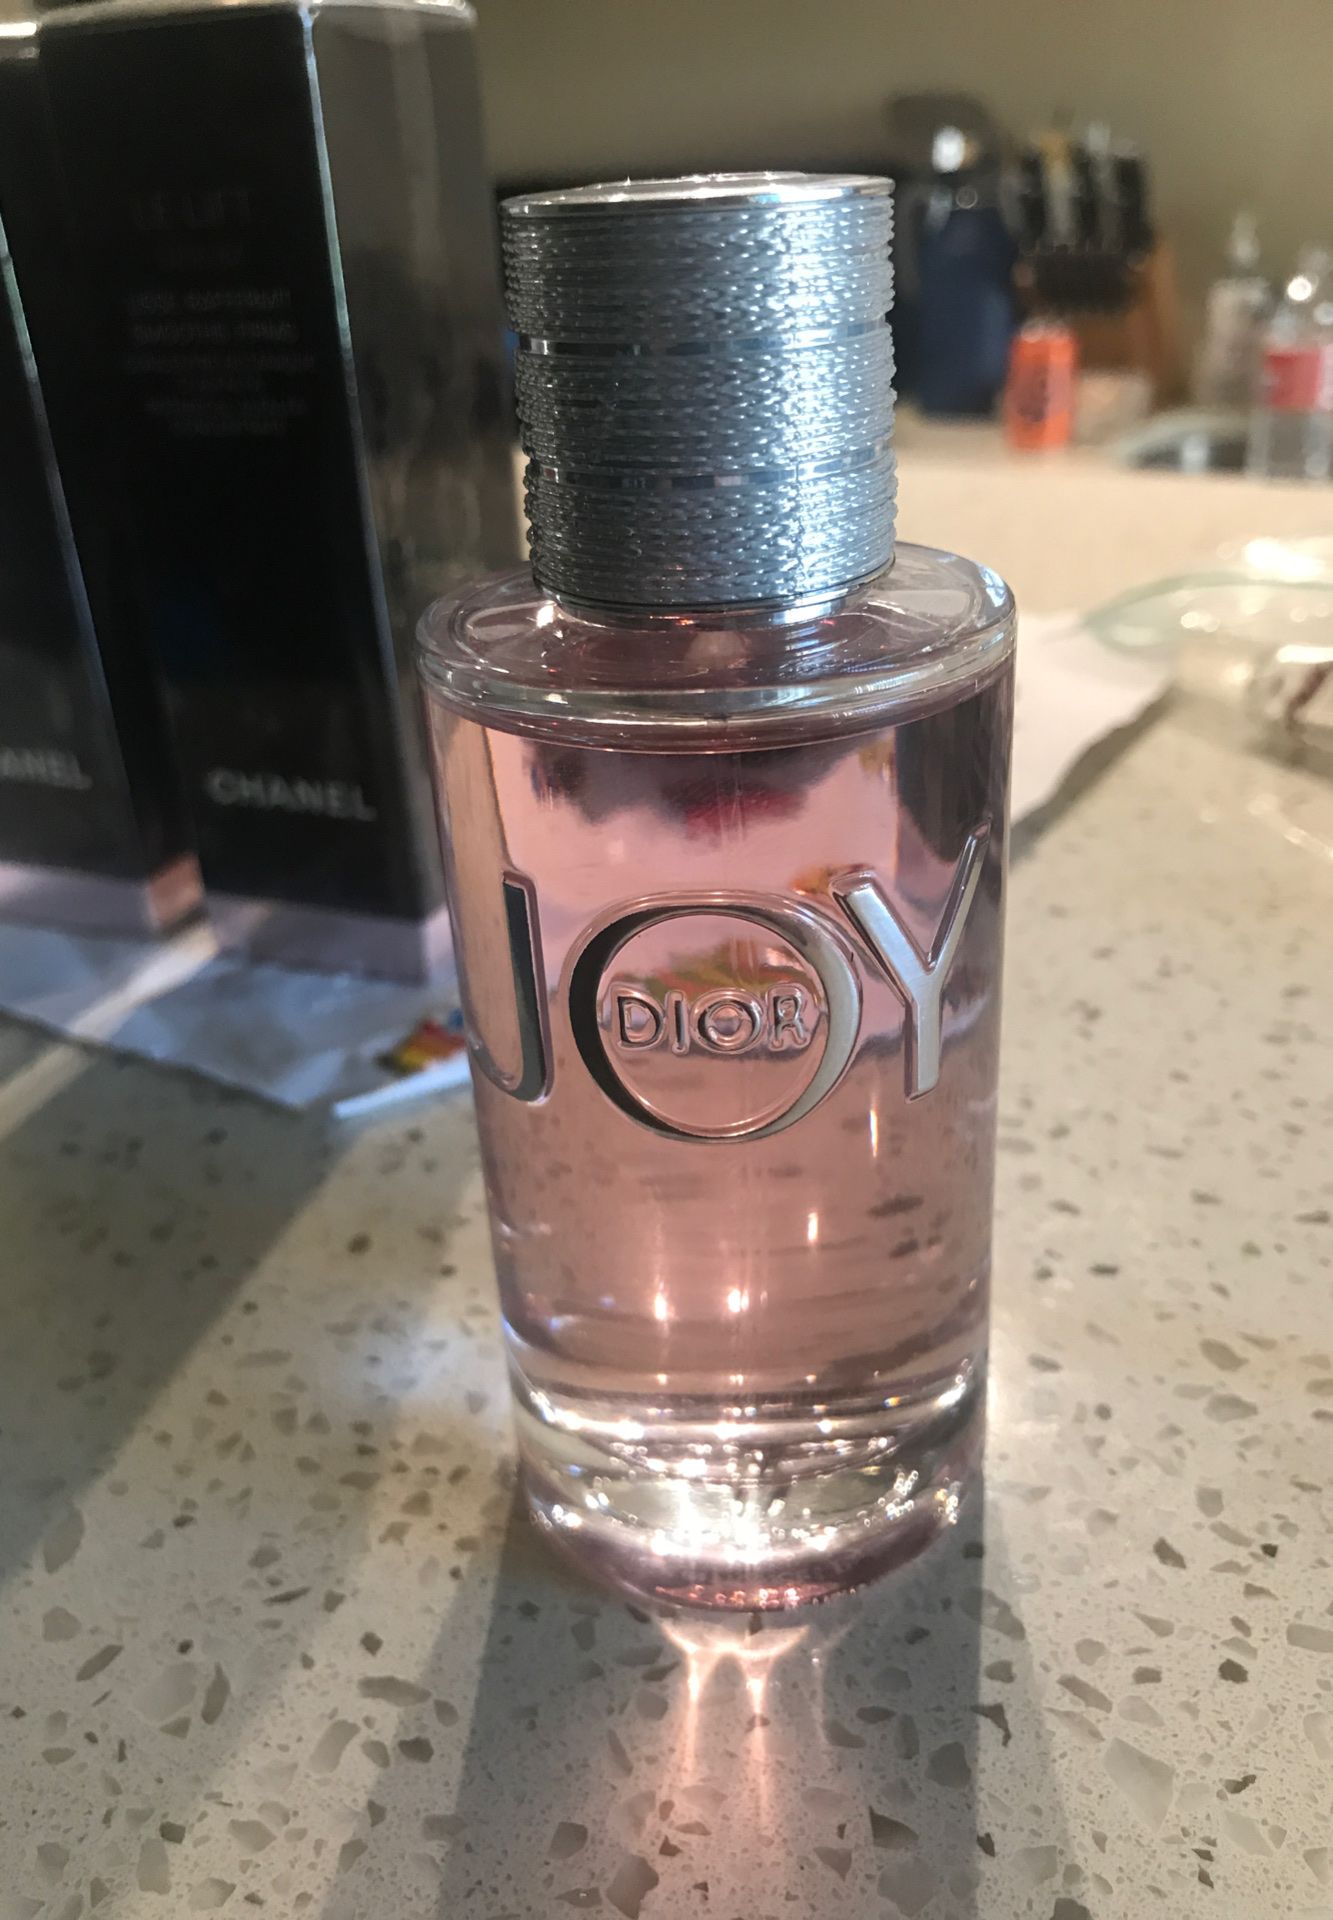 Dior joy perfume